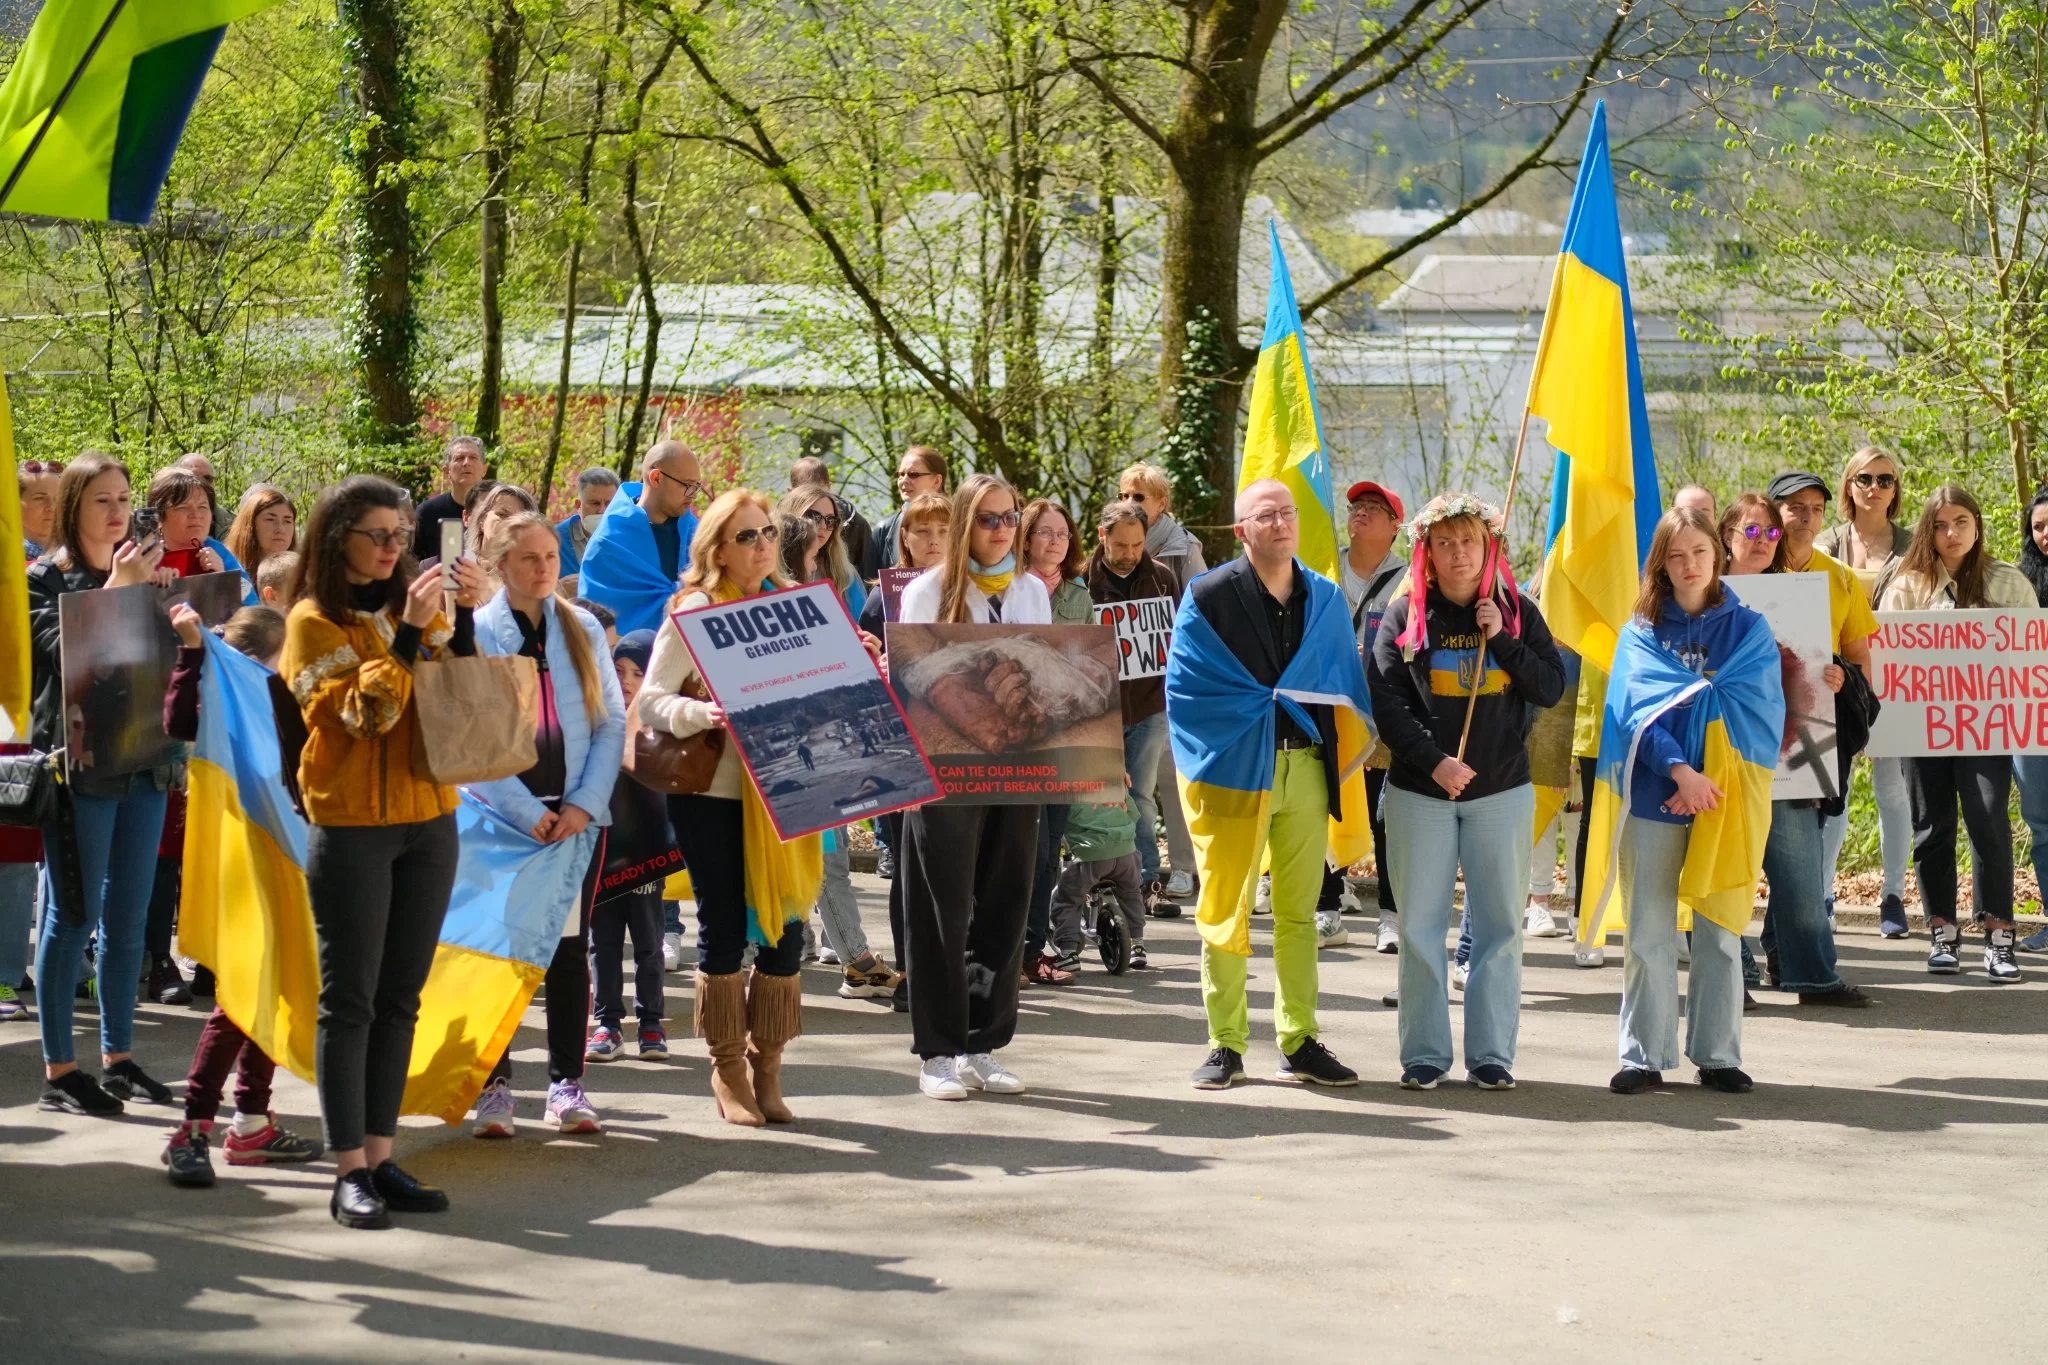 Association of Ukrainians in Luxembourg “LUkraine asbl”